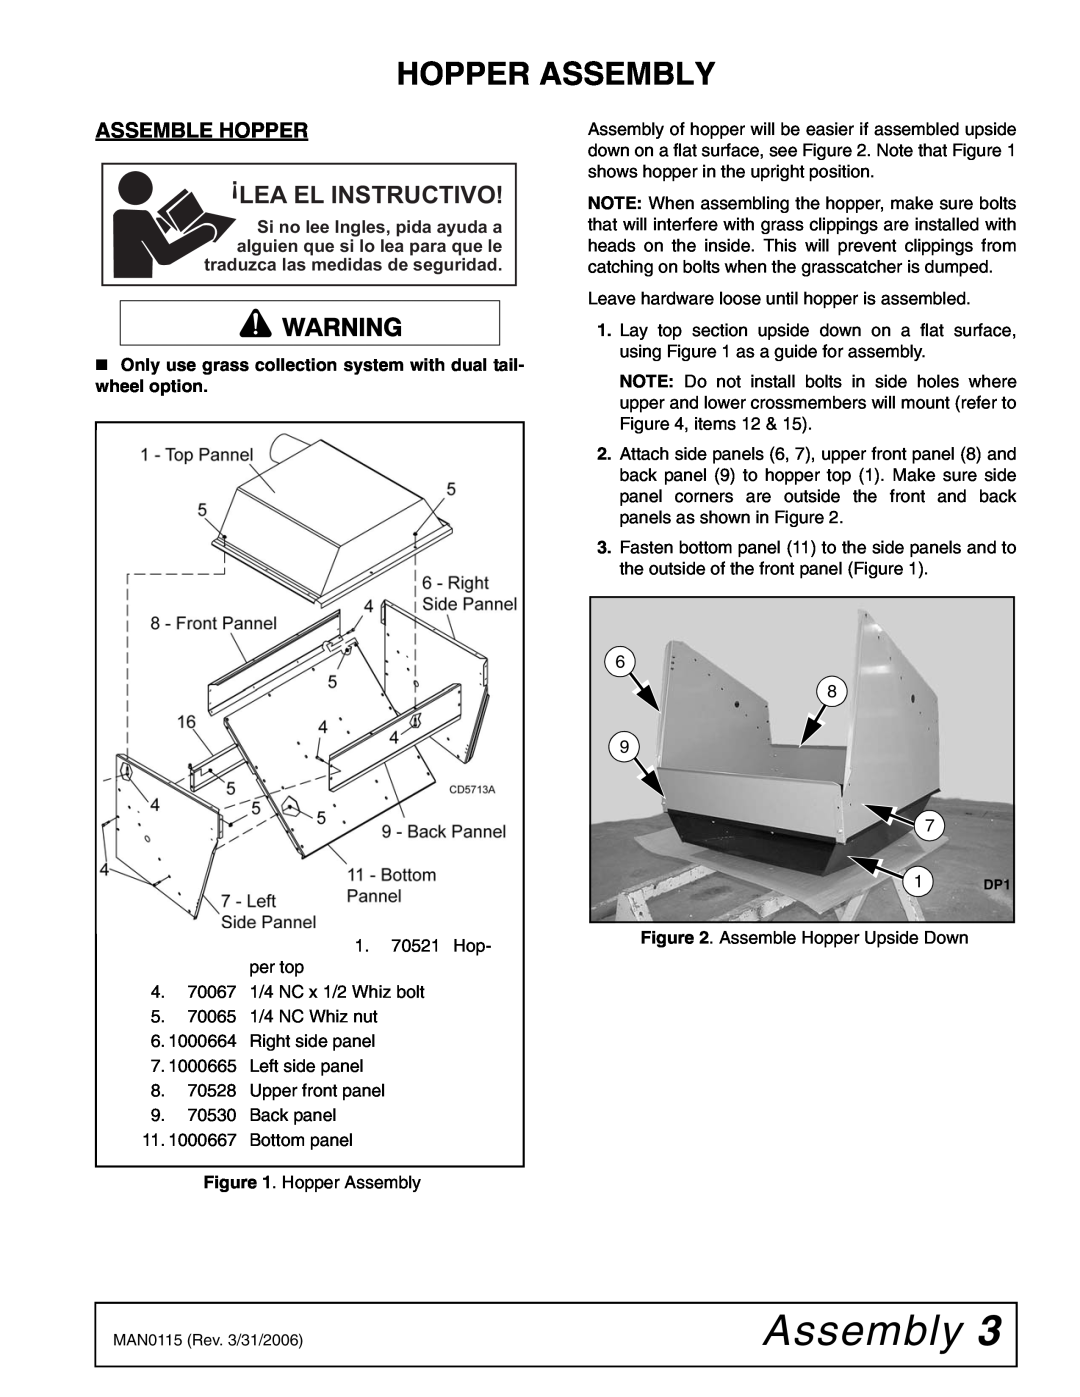 Woods Equipment MAN0115 installation manual Hopper Assembly, Assemble Hopper, Lea El Instructivo 